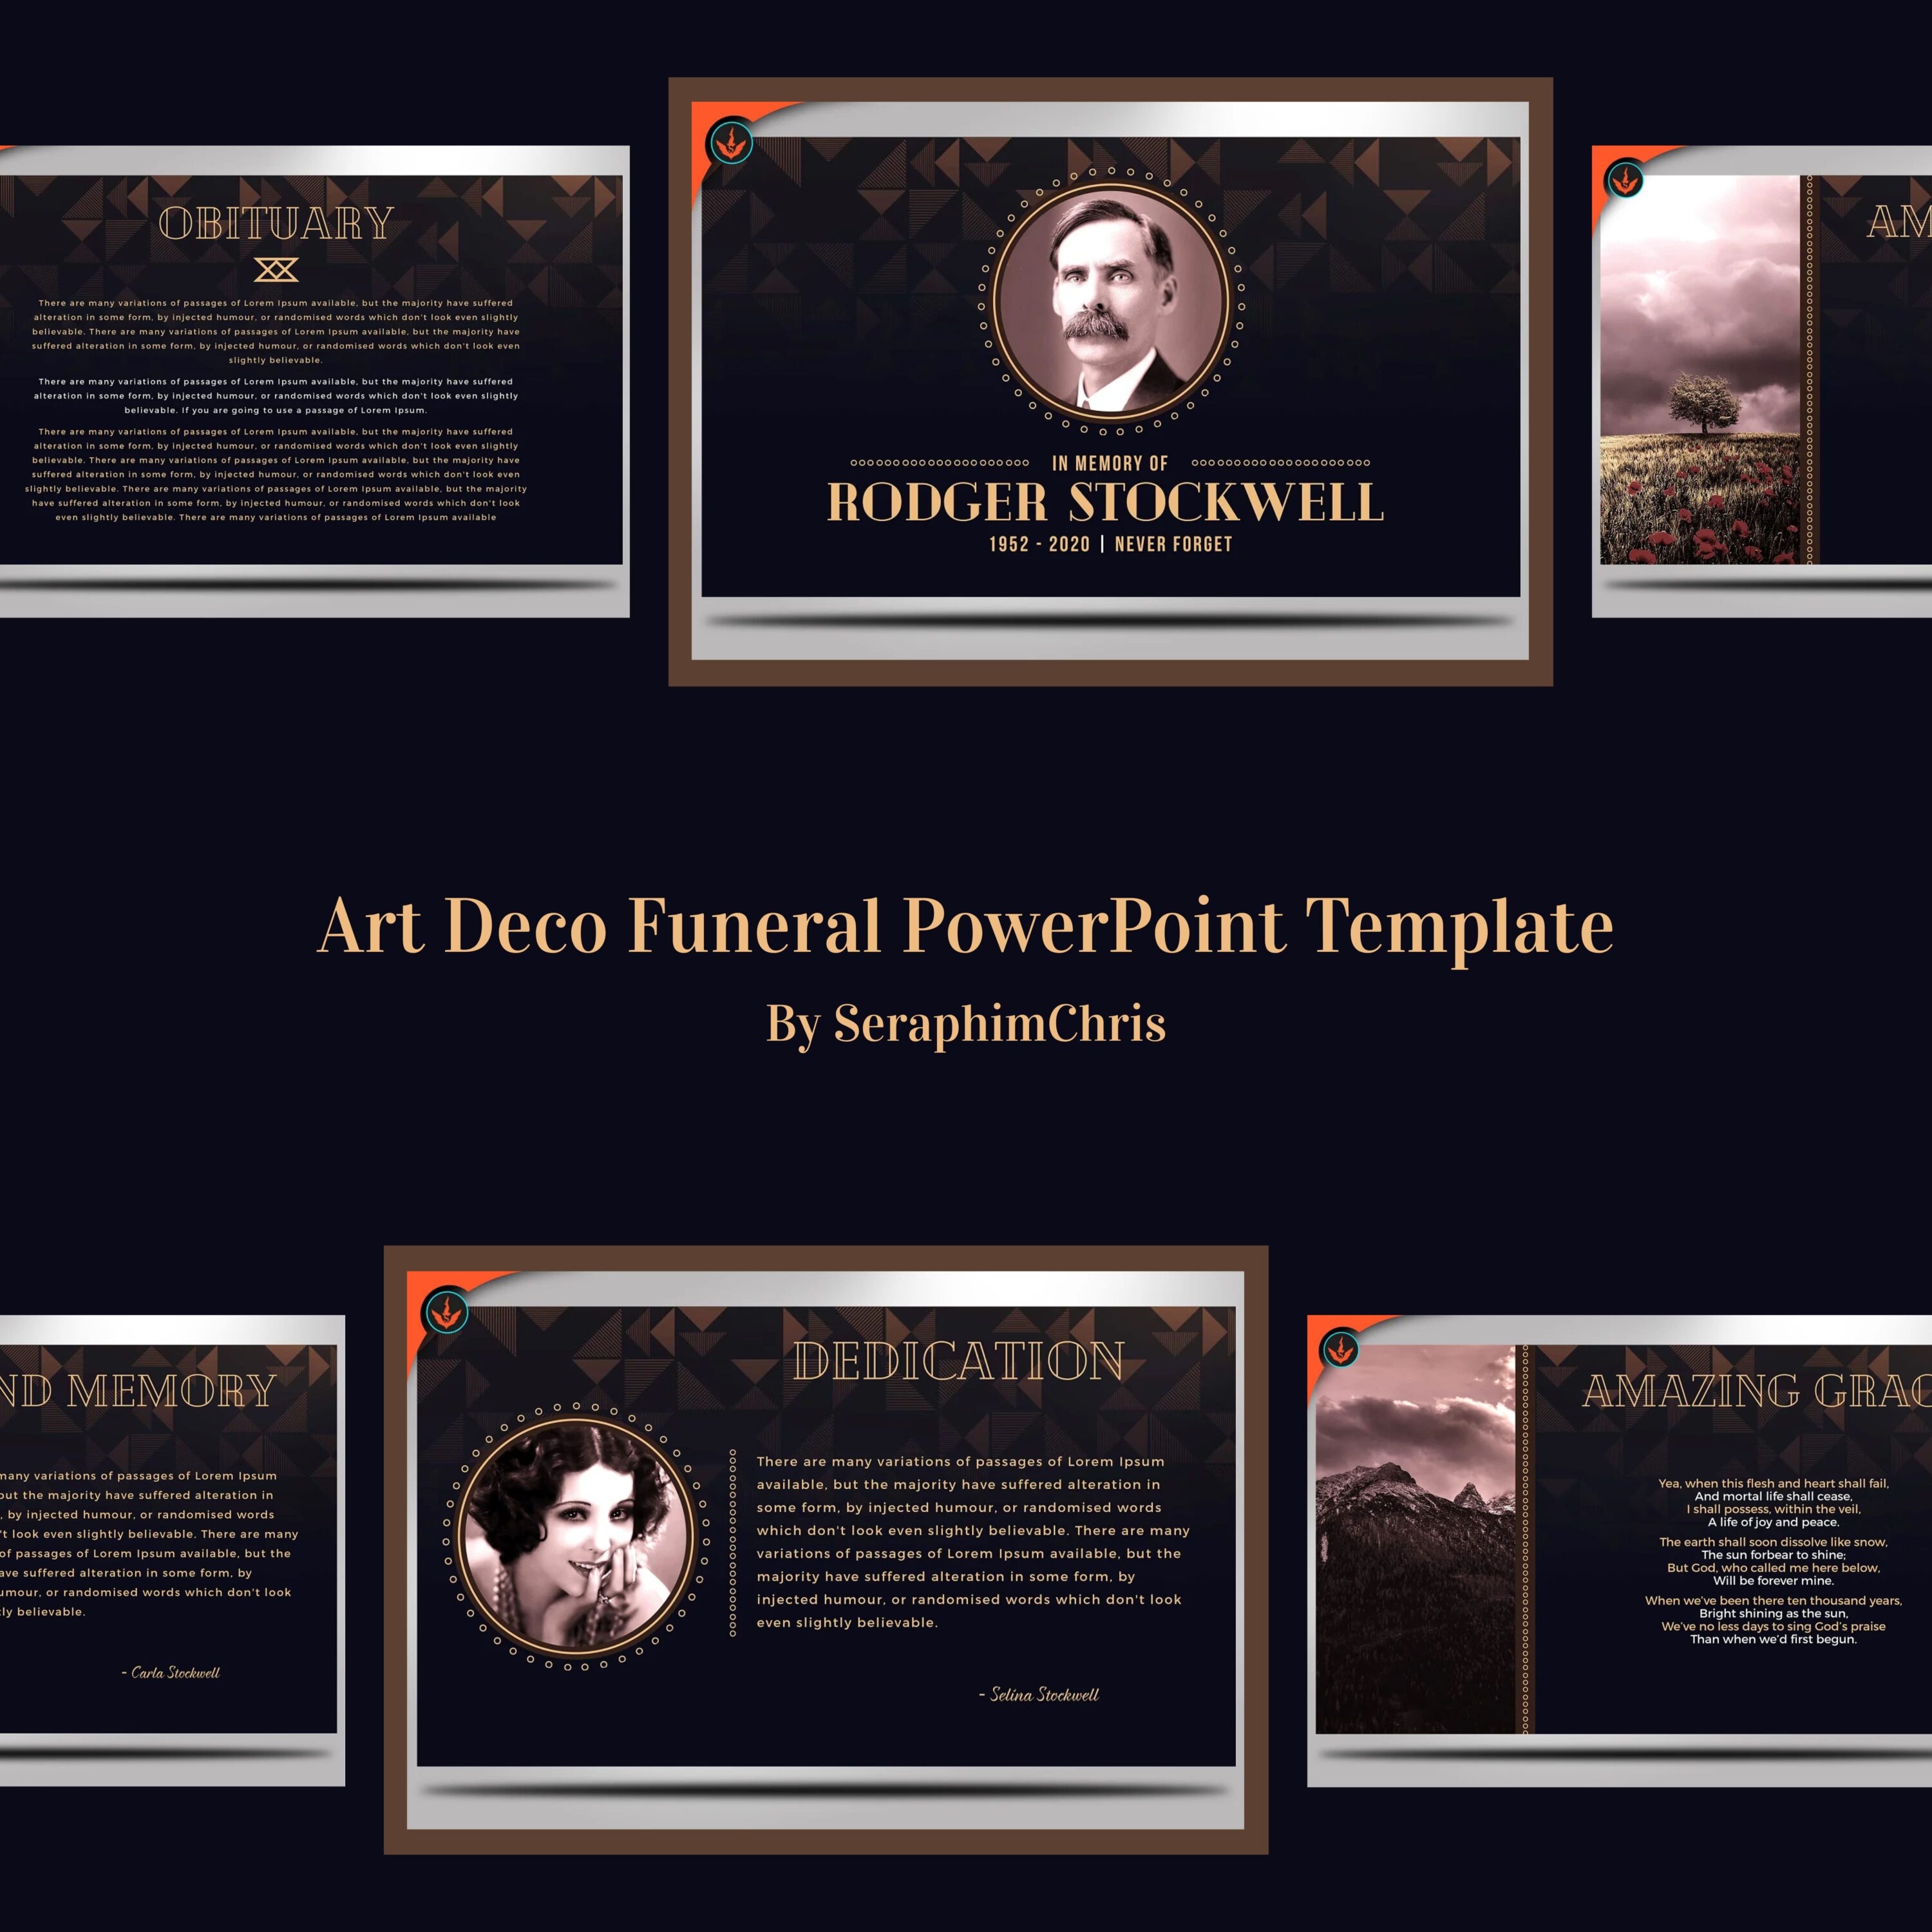 Art Deco Funeral PowerPoint Template.